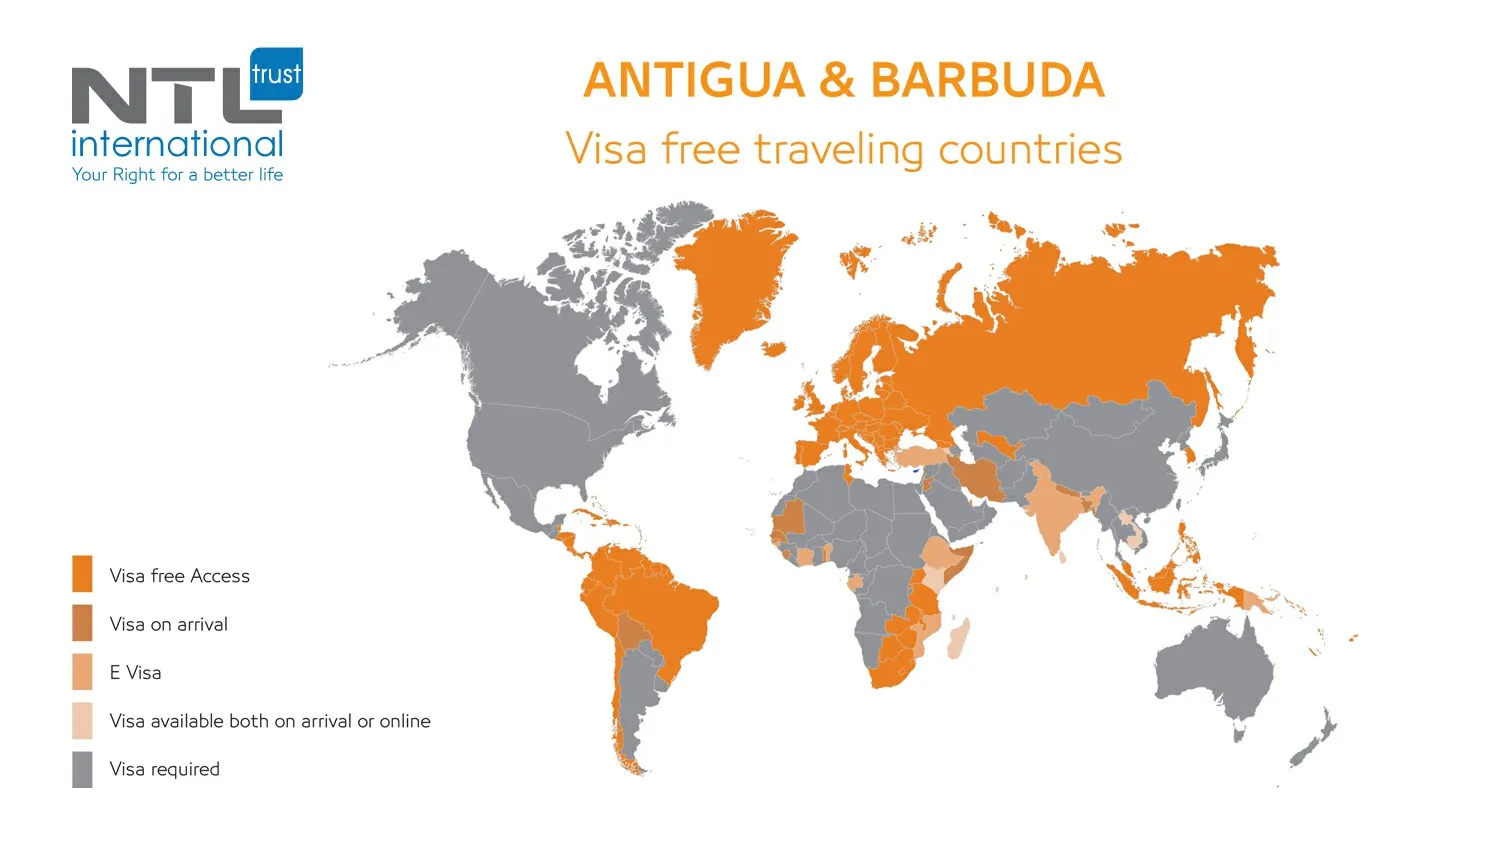 Antigua & Barbuda Visa-free travelling NTL